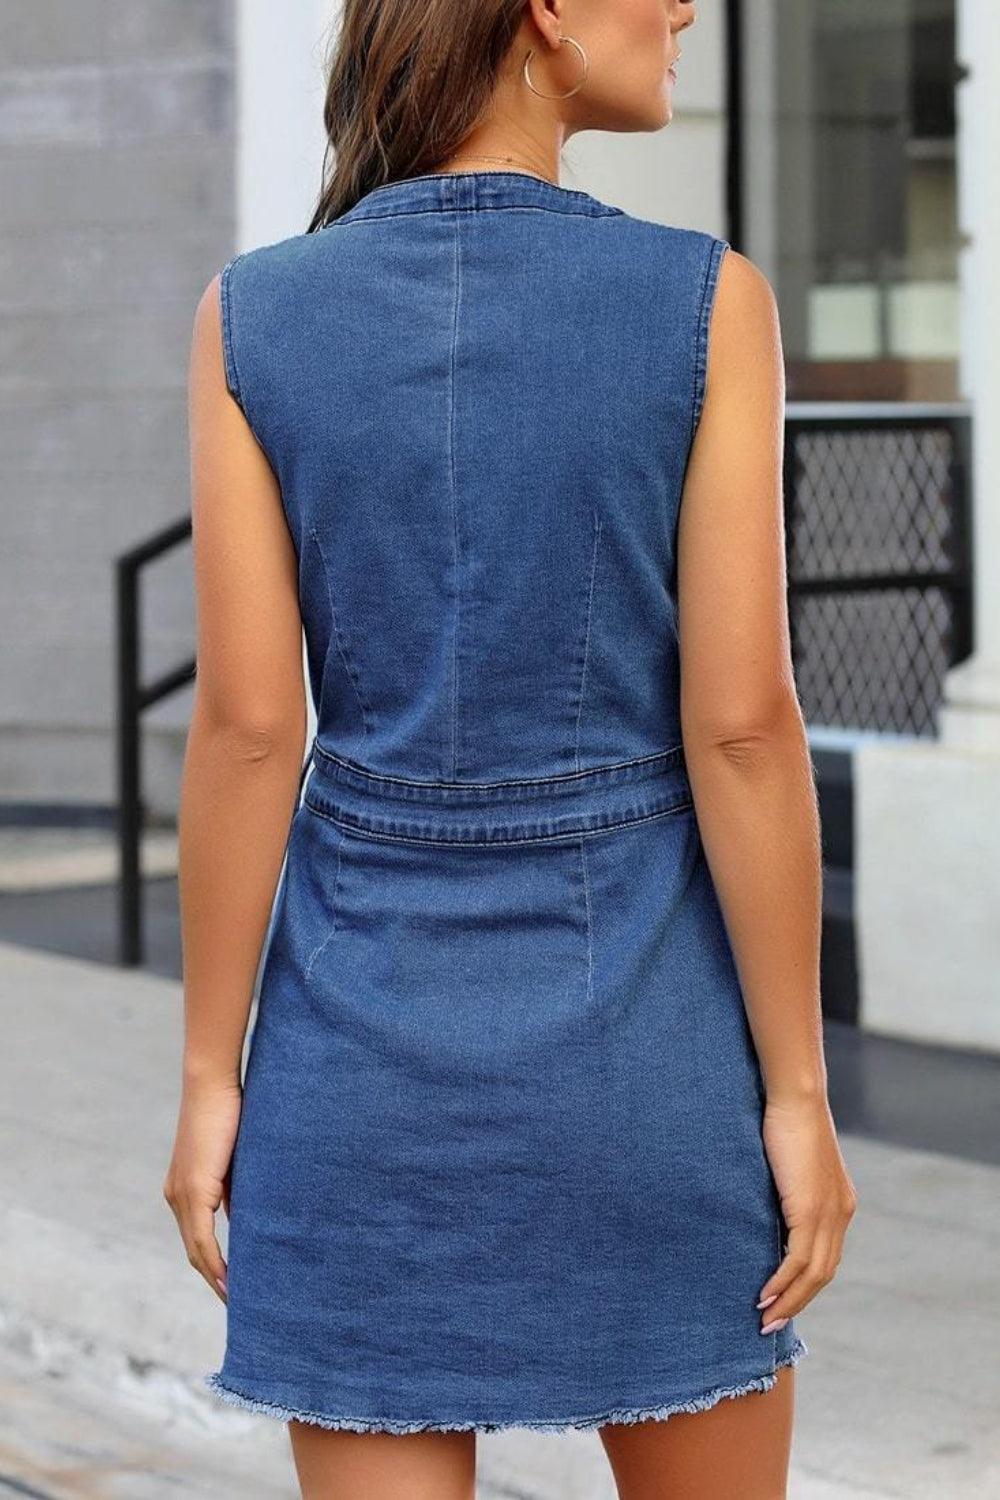 Bona Fide Fashion - Full Size Button Up V-Neck Sleeveless Denim Dress - Women Fashion - Bona Fide Fashion